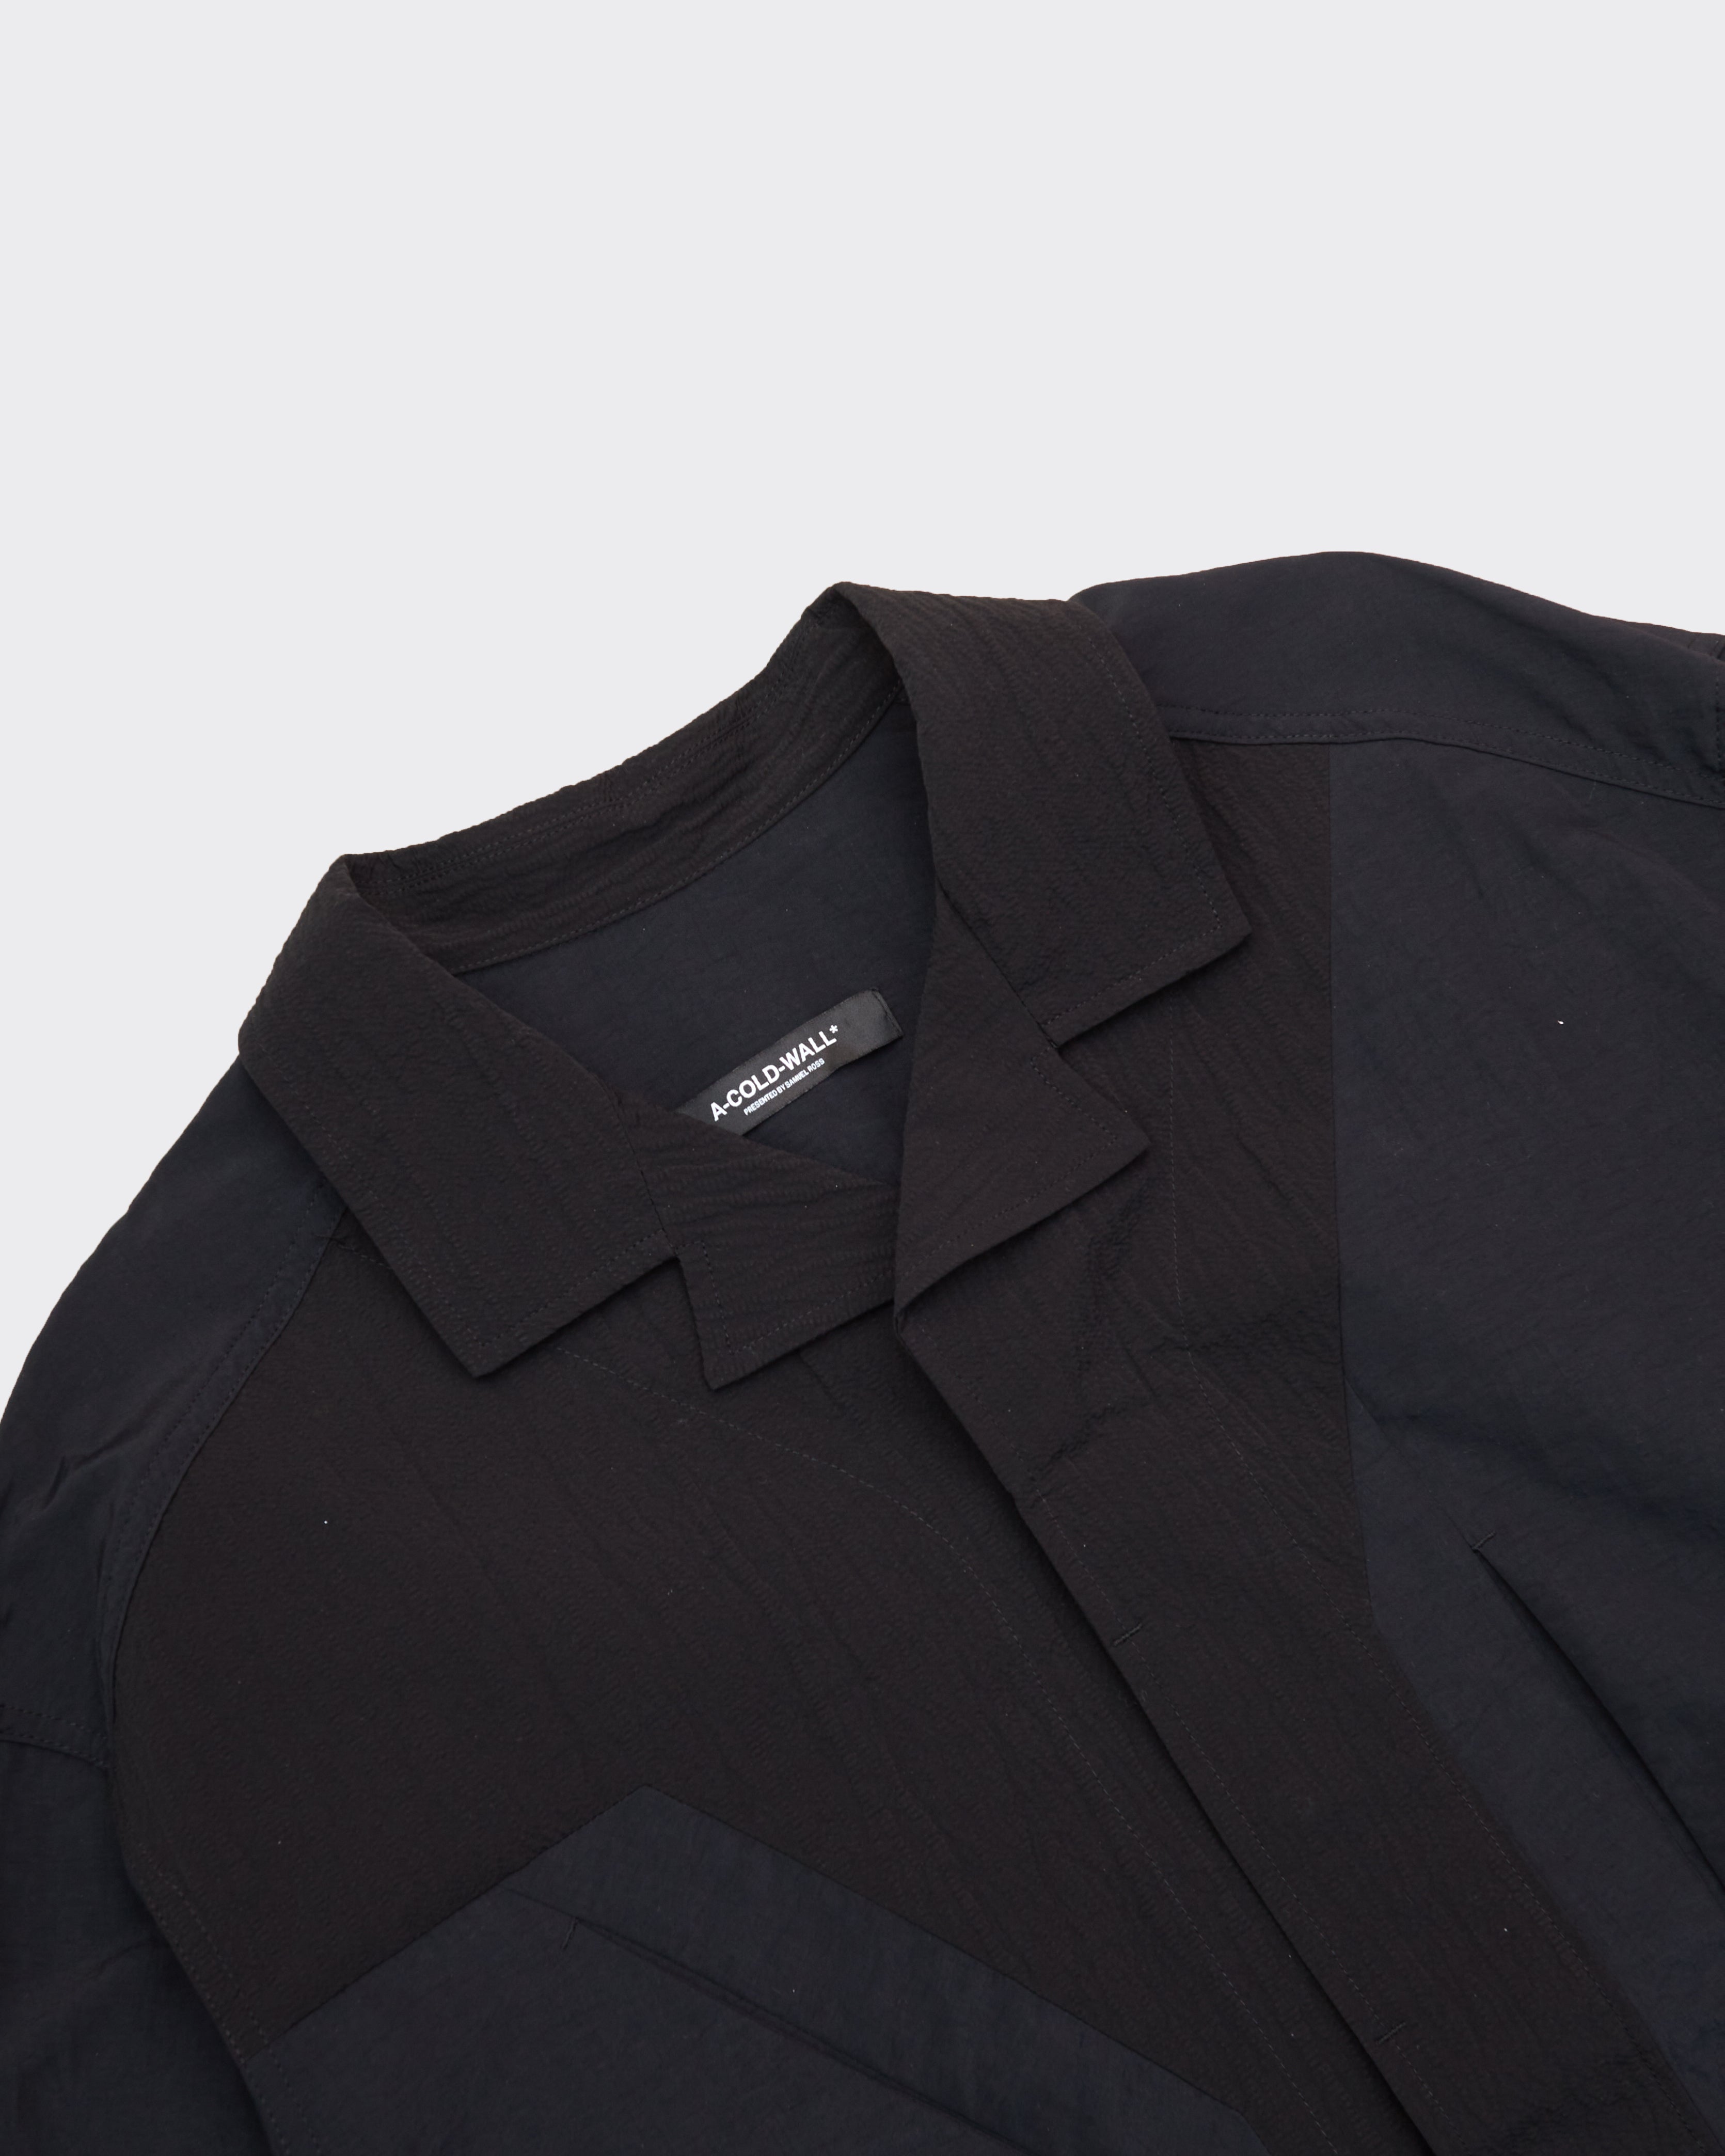 Dual Texture Black Shirt